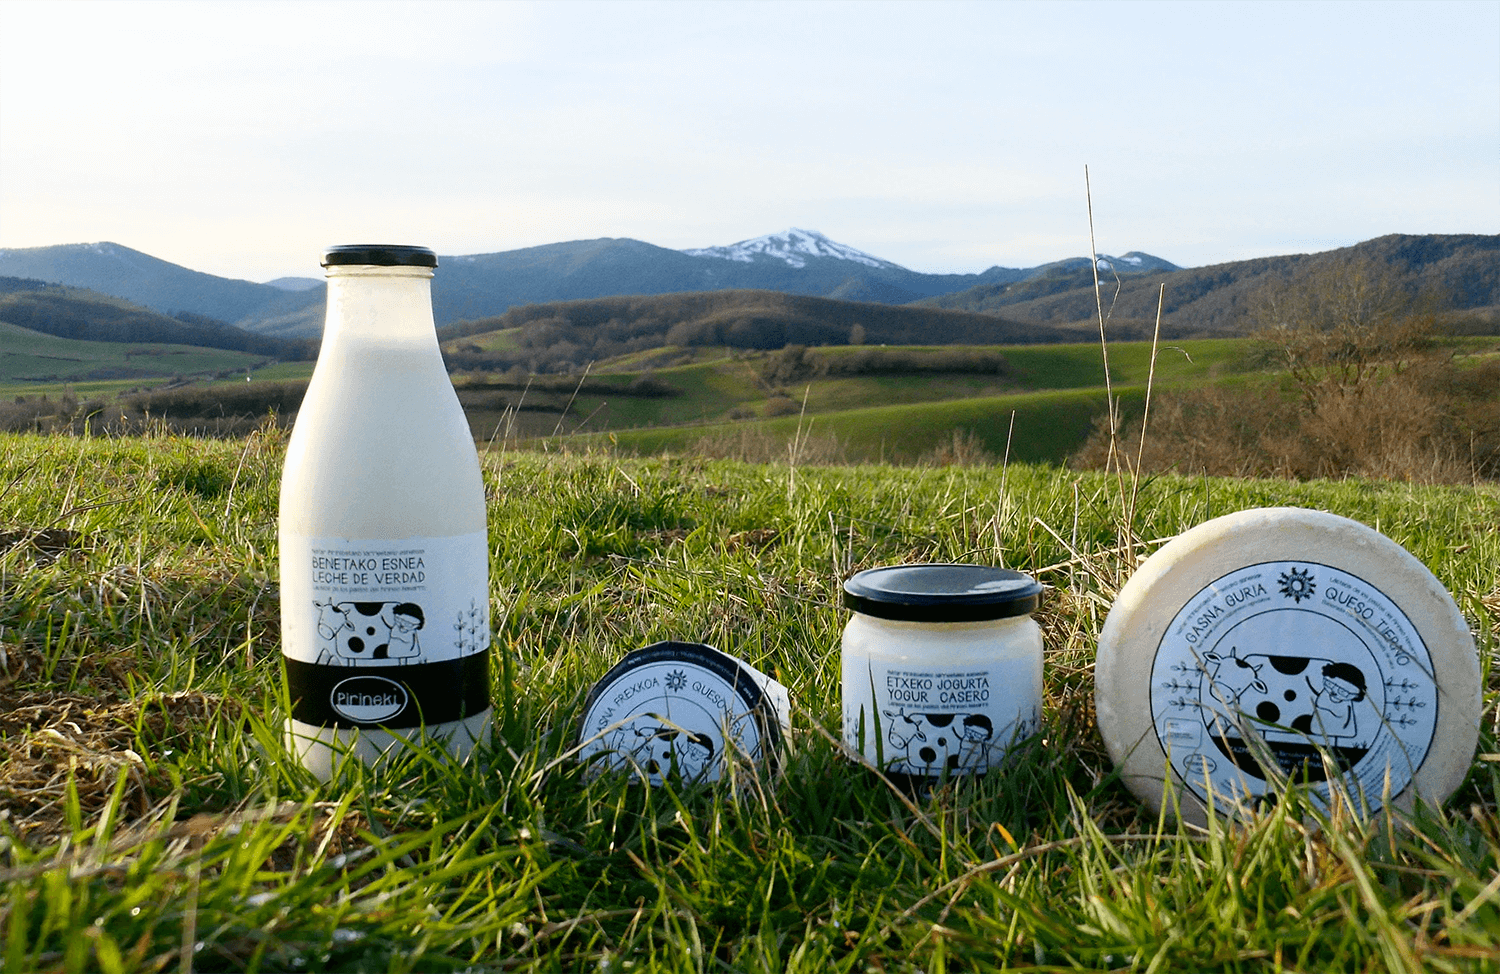 Descubre Pirineki Lácteos de pastos del Pirineo Navarro